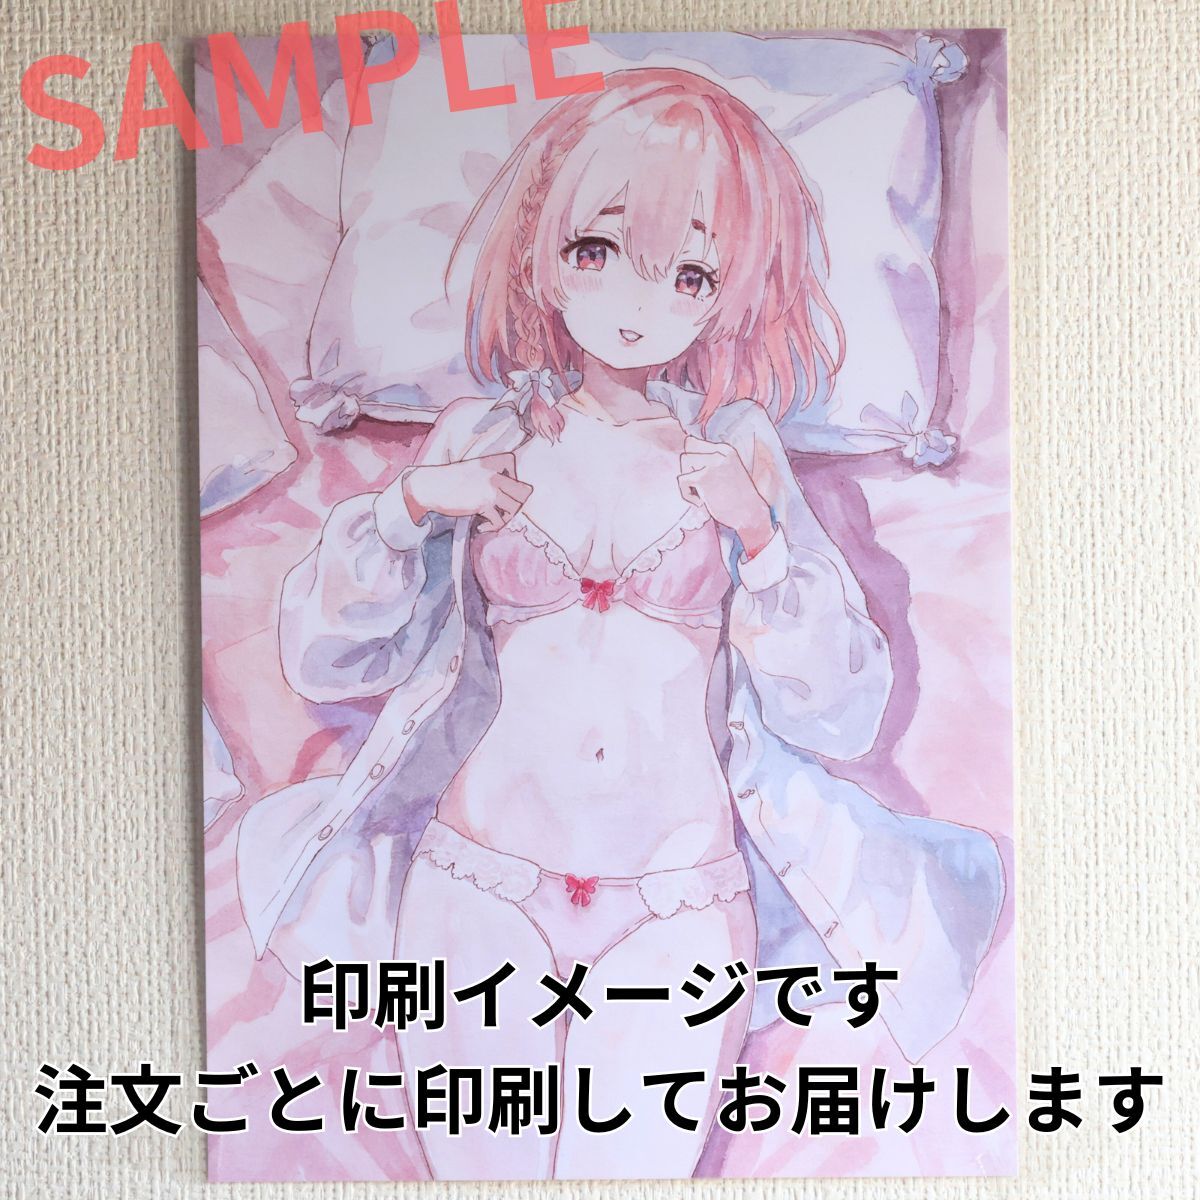 A4 poster hand-drawn illustrations she,... does Sakura .... .. Len kano anime same person 2404134